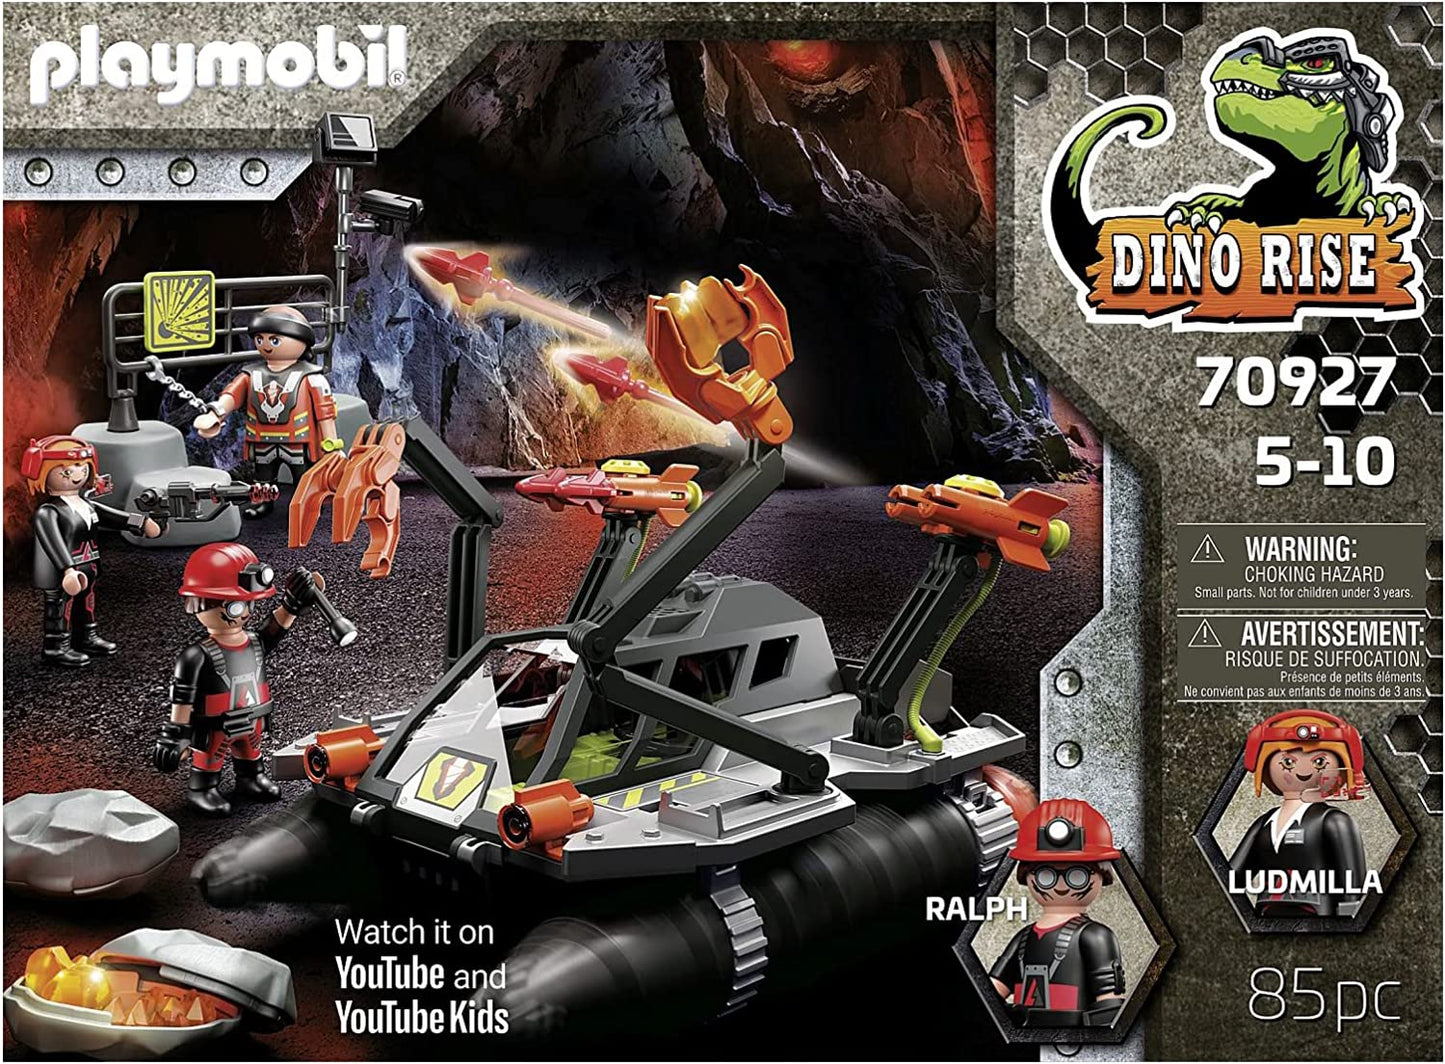 Playmobil Dino Rise - Comet Corp. Demolition Drill